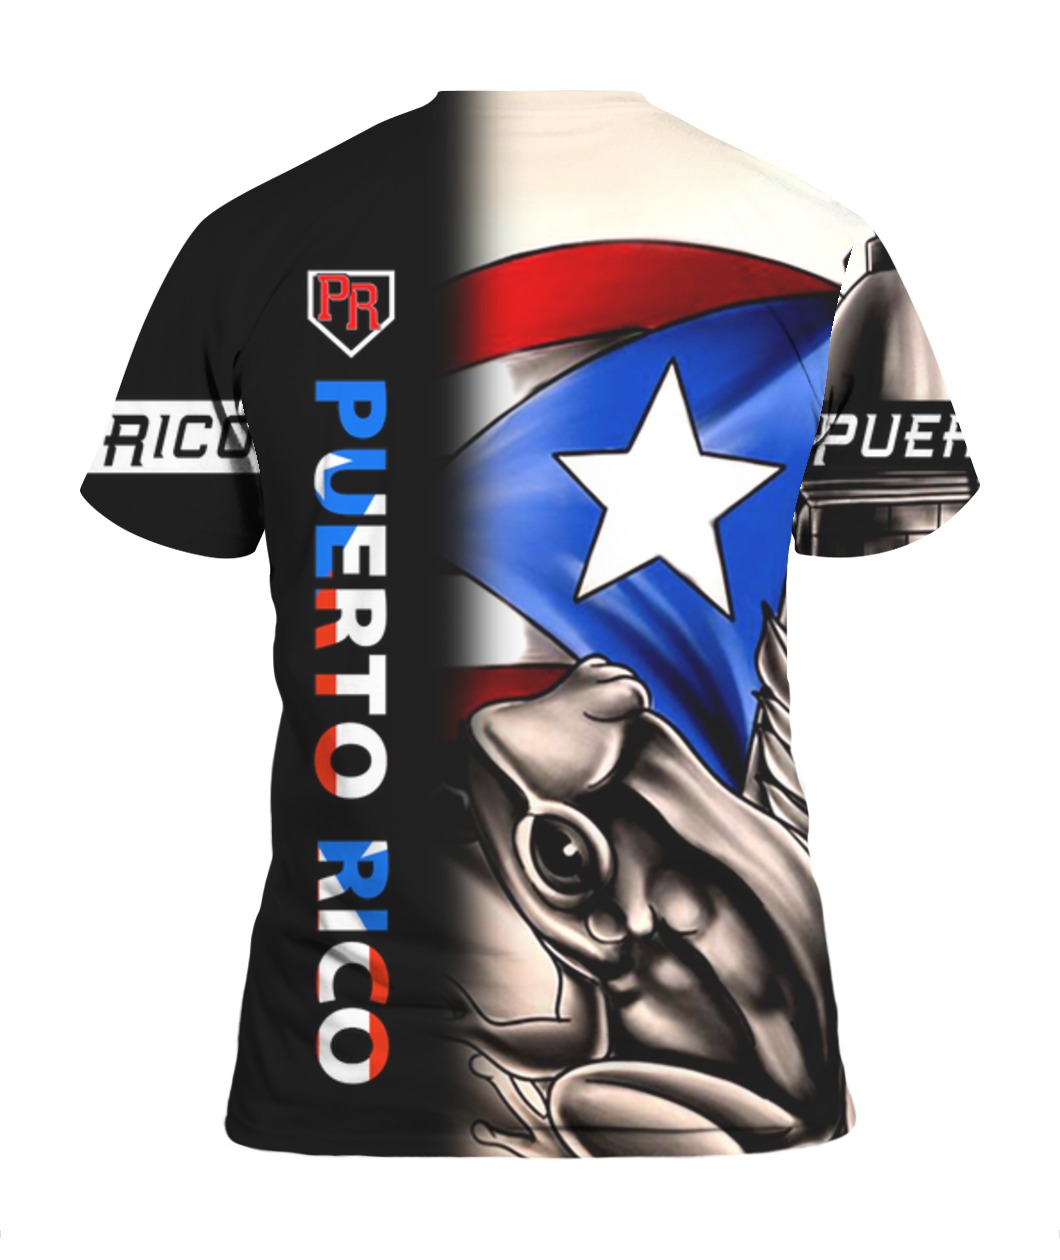 Puerto Rico Taino Team PR 3d All Over Symbols shirt, sweatshirt